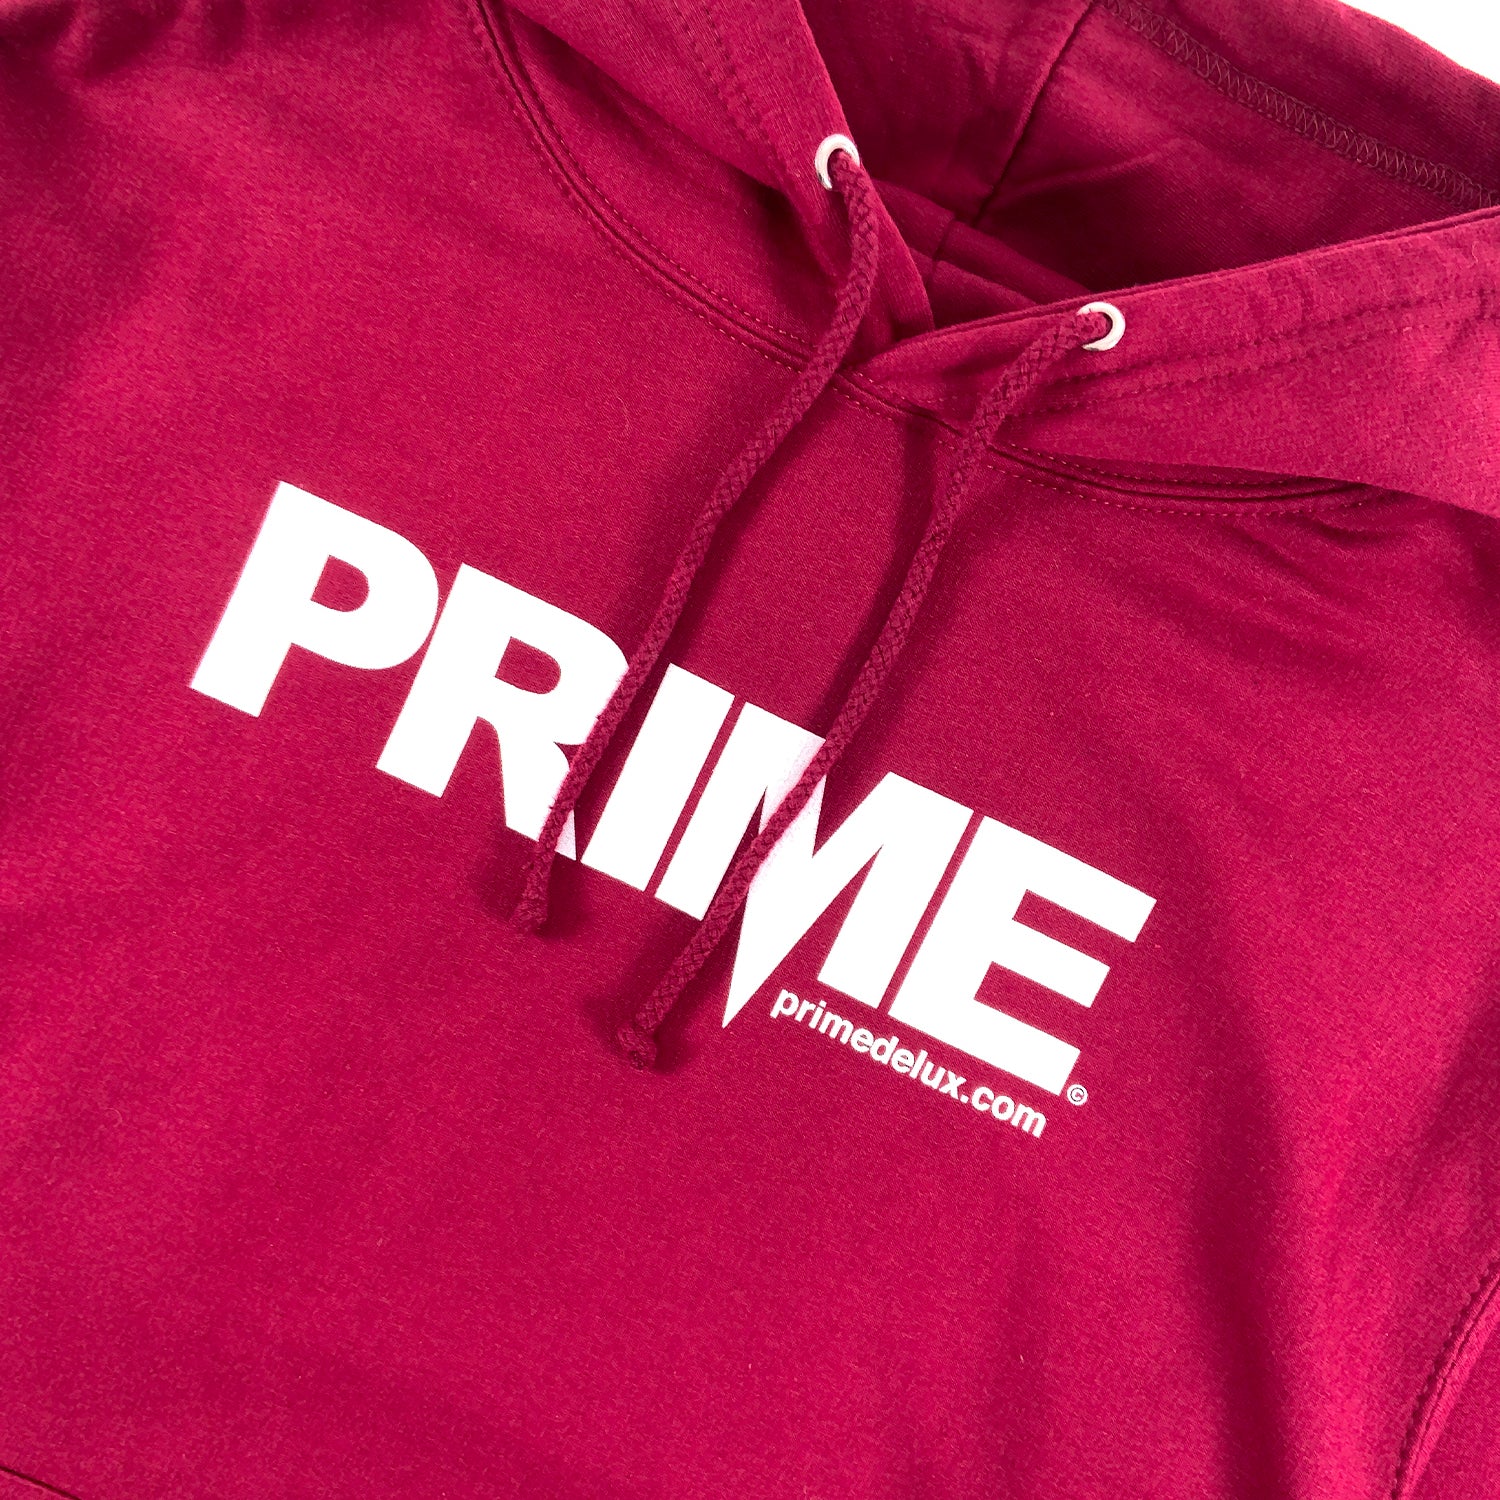 PRIME DELUX OG PREMIUM HOODED SWEAT - BURGUNDY / WHITE - Prime Delux Store